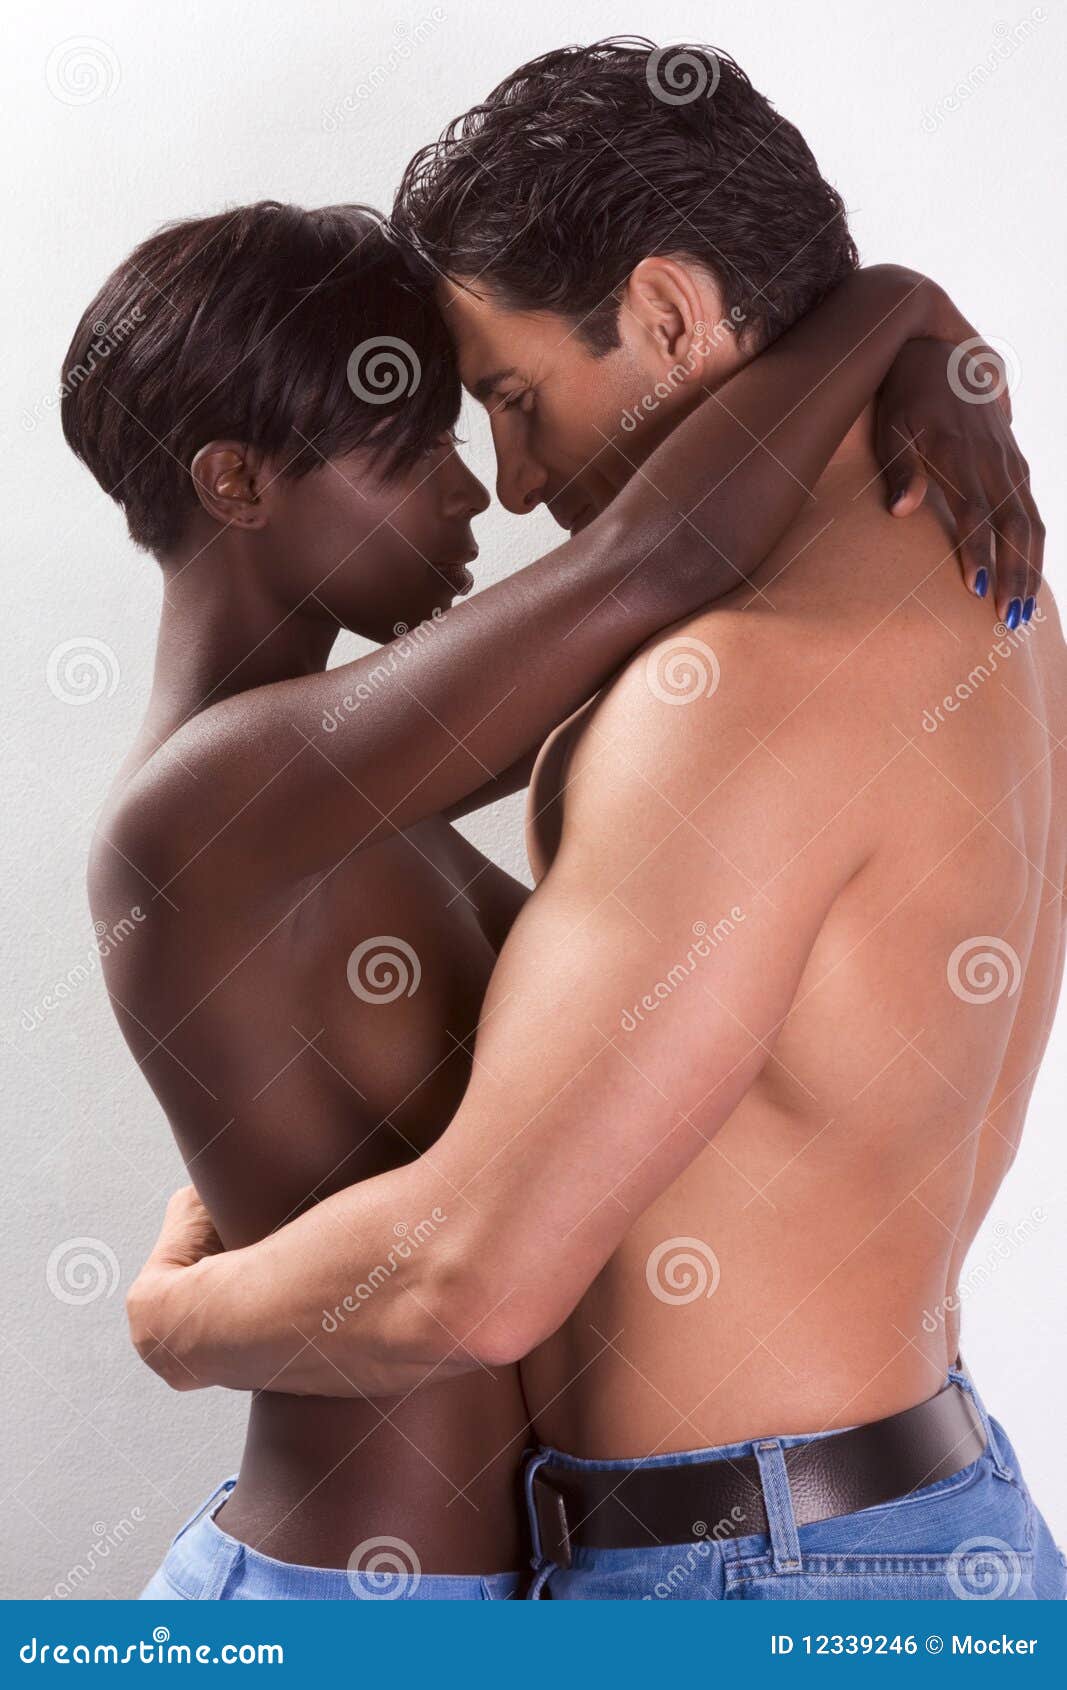 black lesbians making out